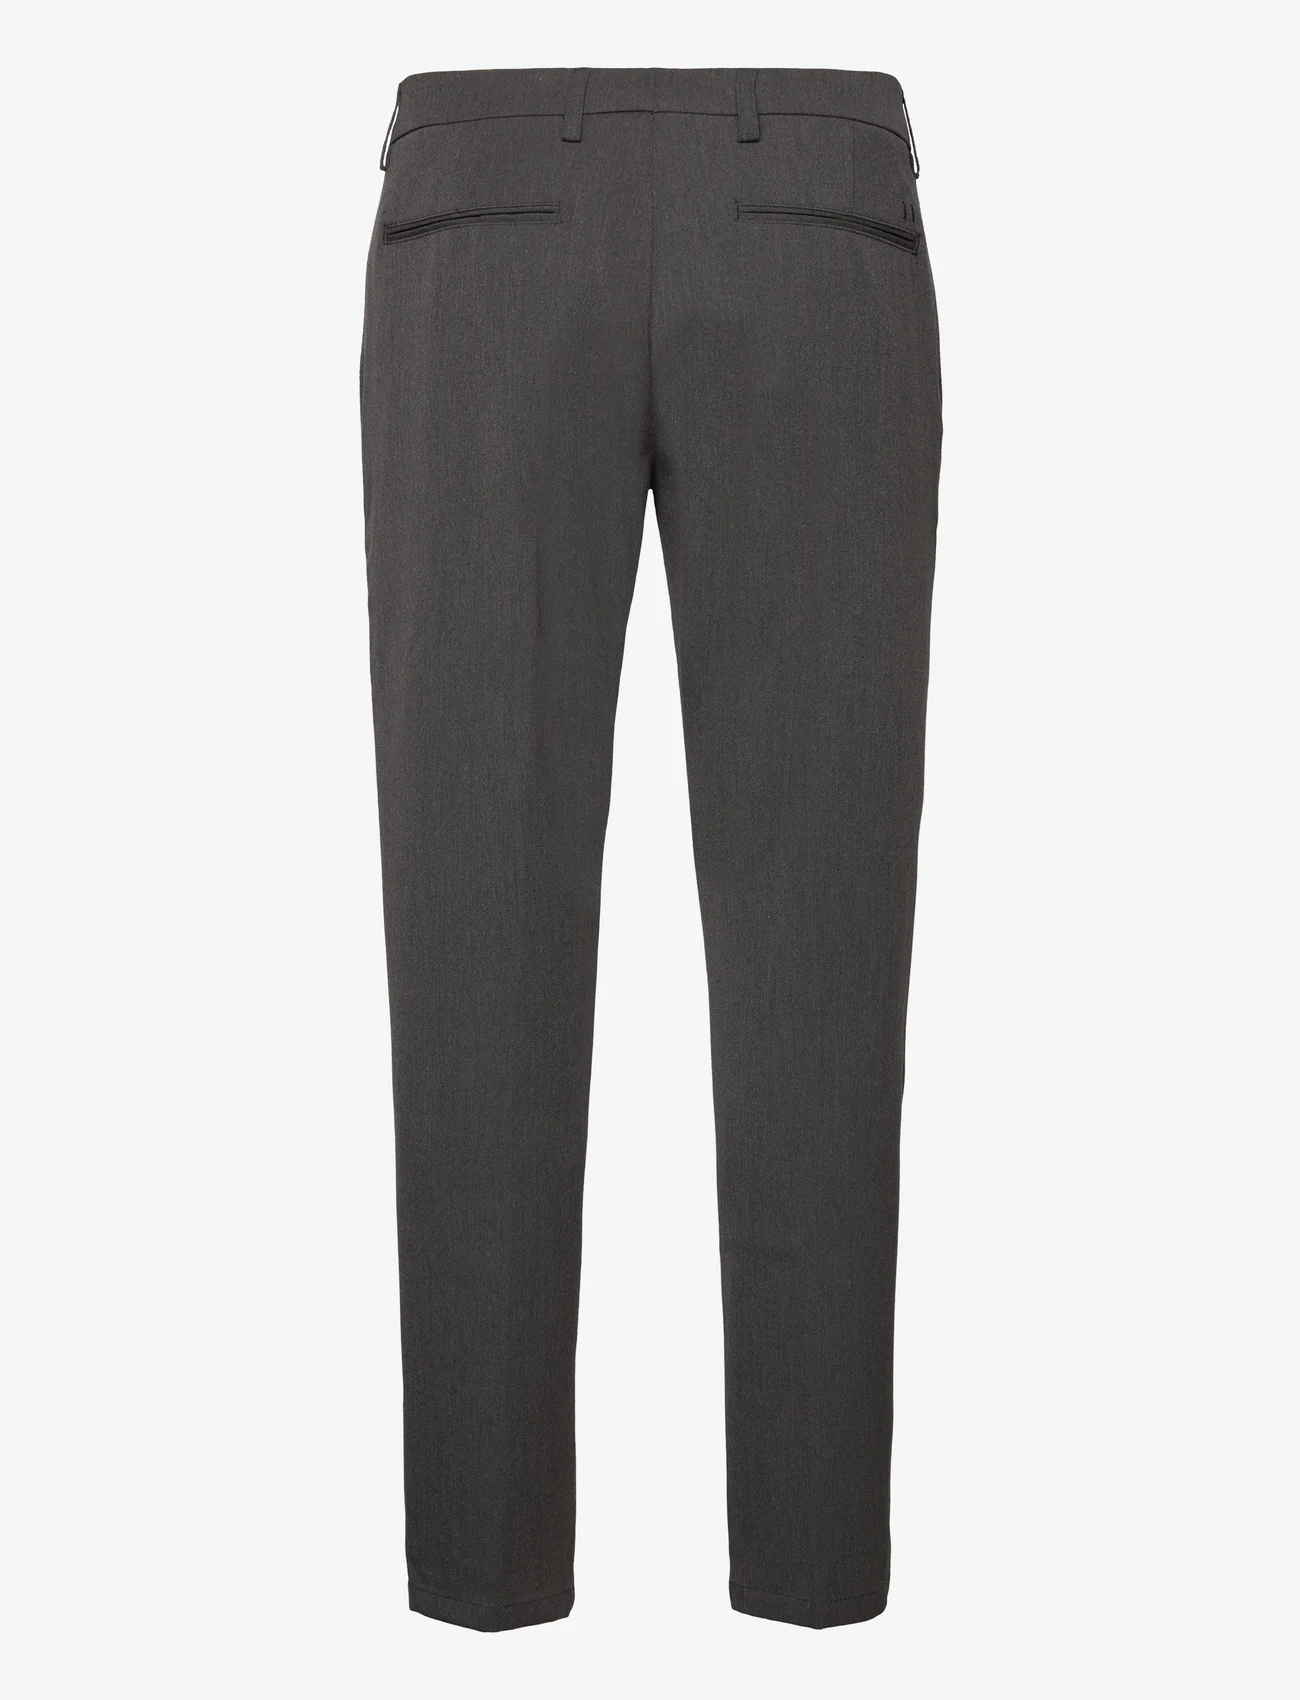 Les Deux - Como Reg Suit Pants - kostymbyxor - dark grey melange - 1